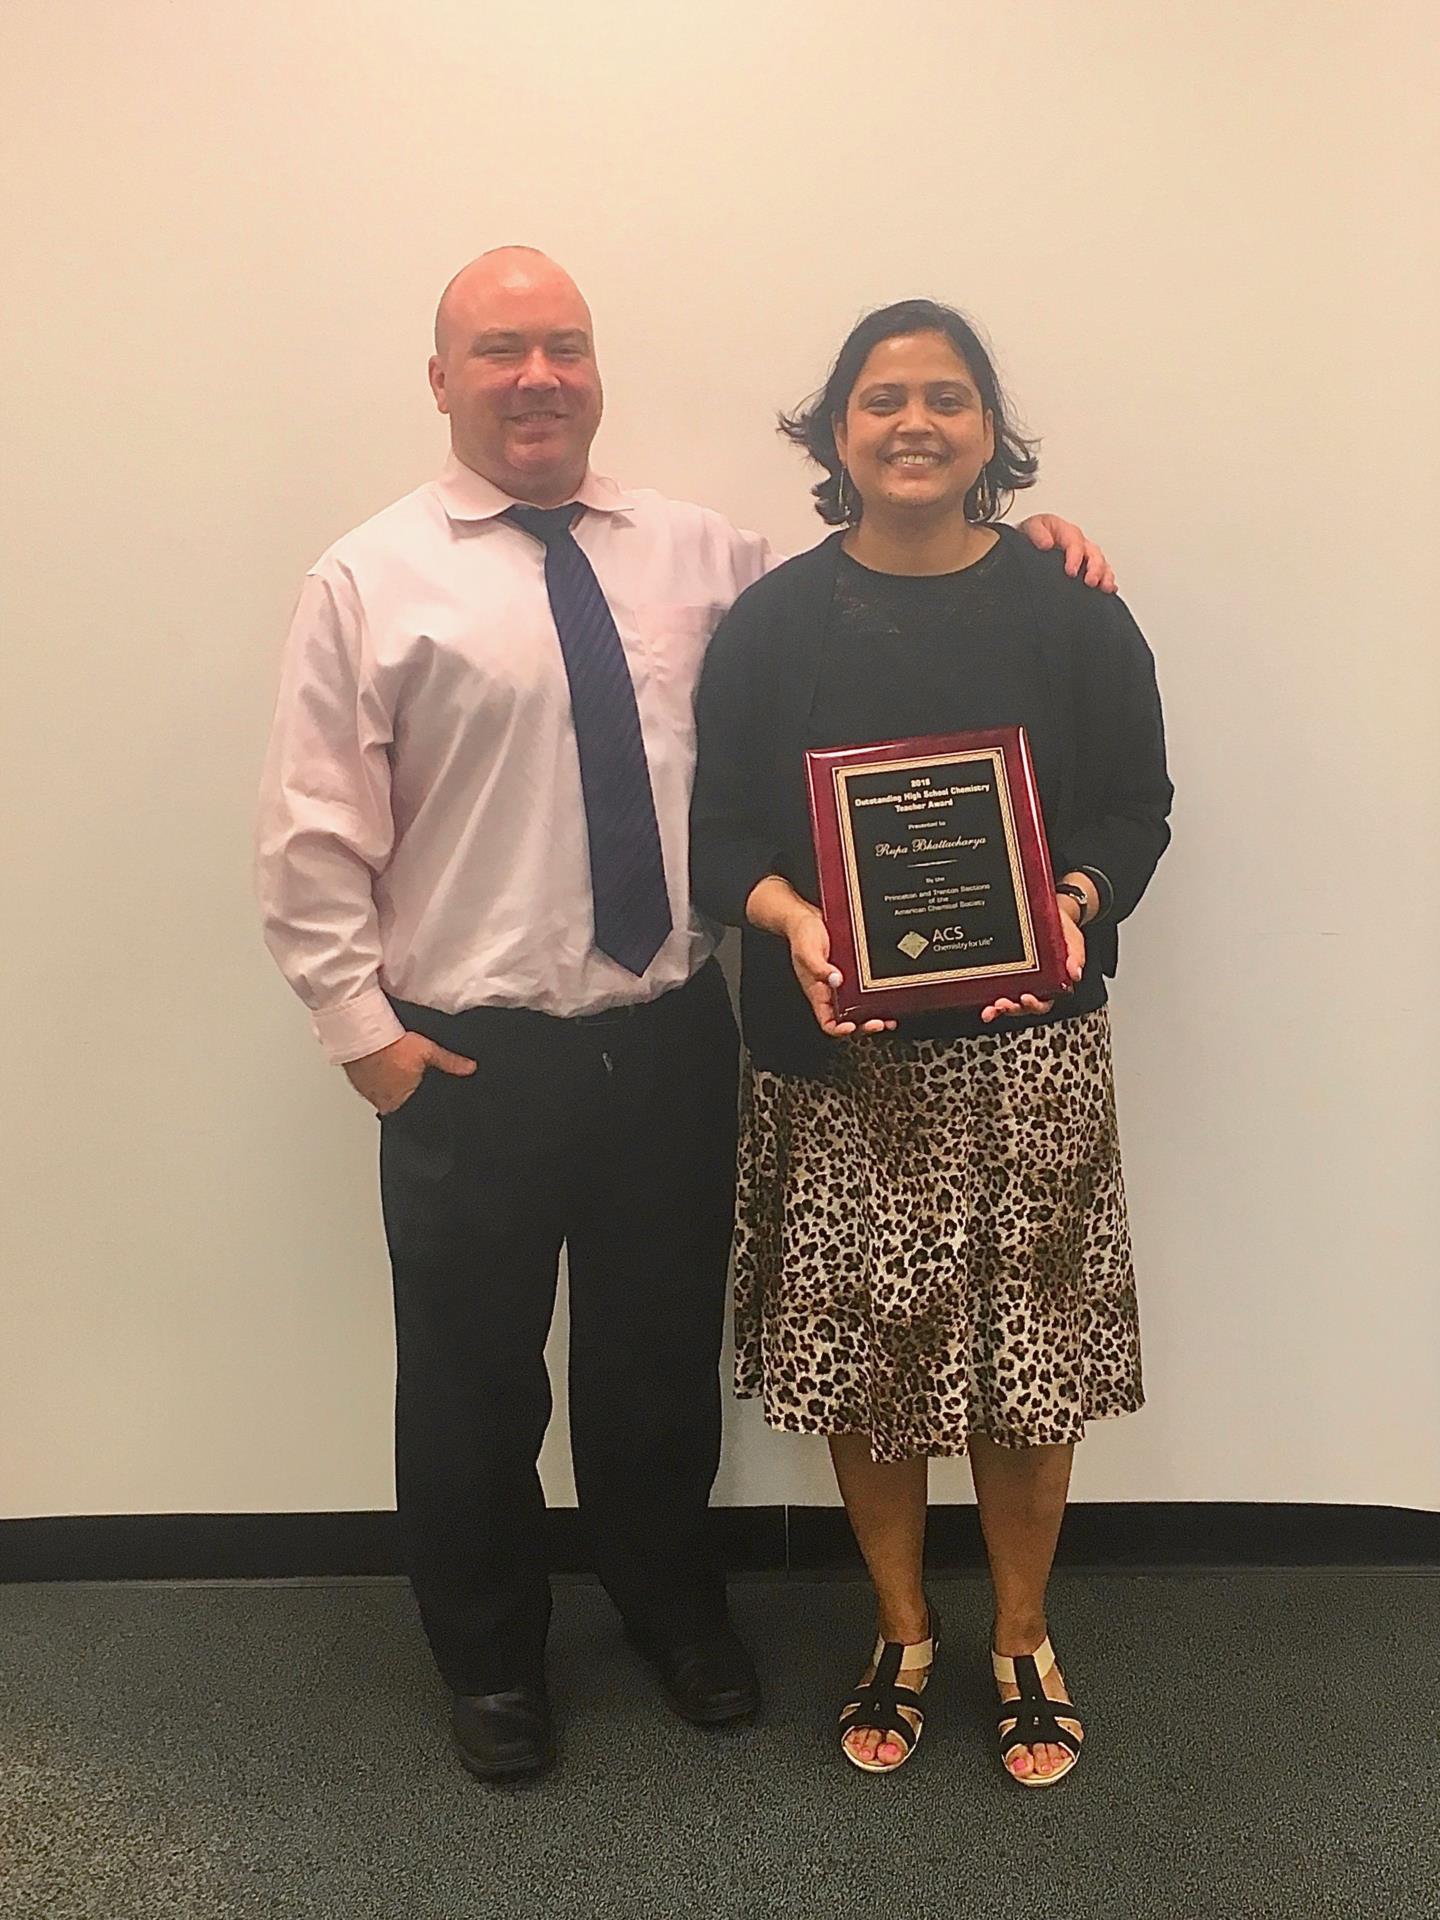 Dr. Bhattacharya Wins the 2018 ACS Outstanding High School Chemistry Teacher Award!